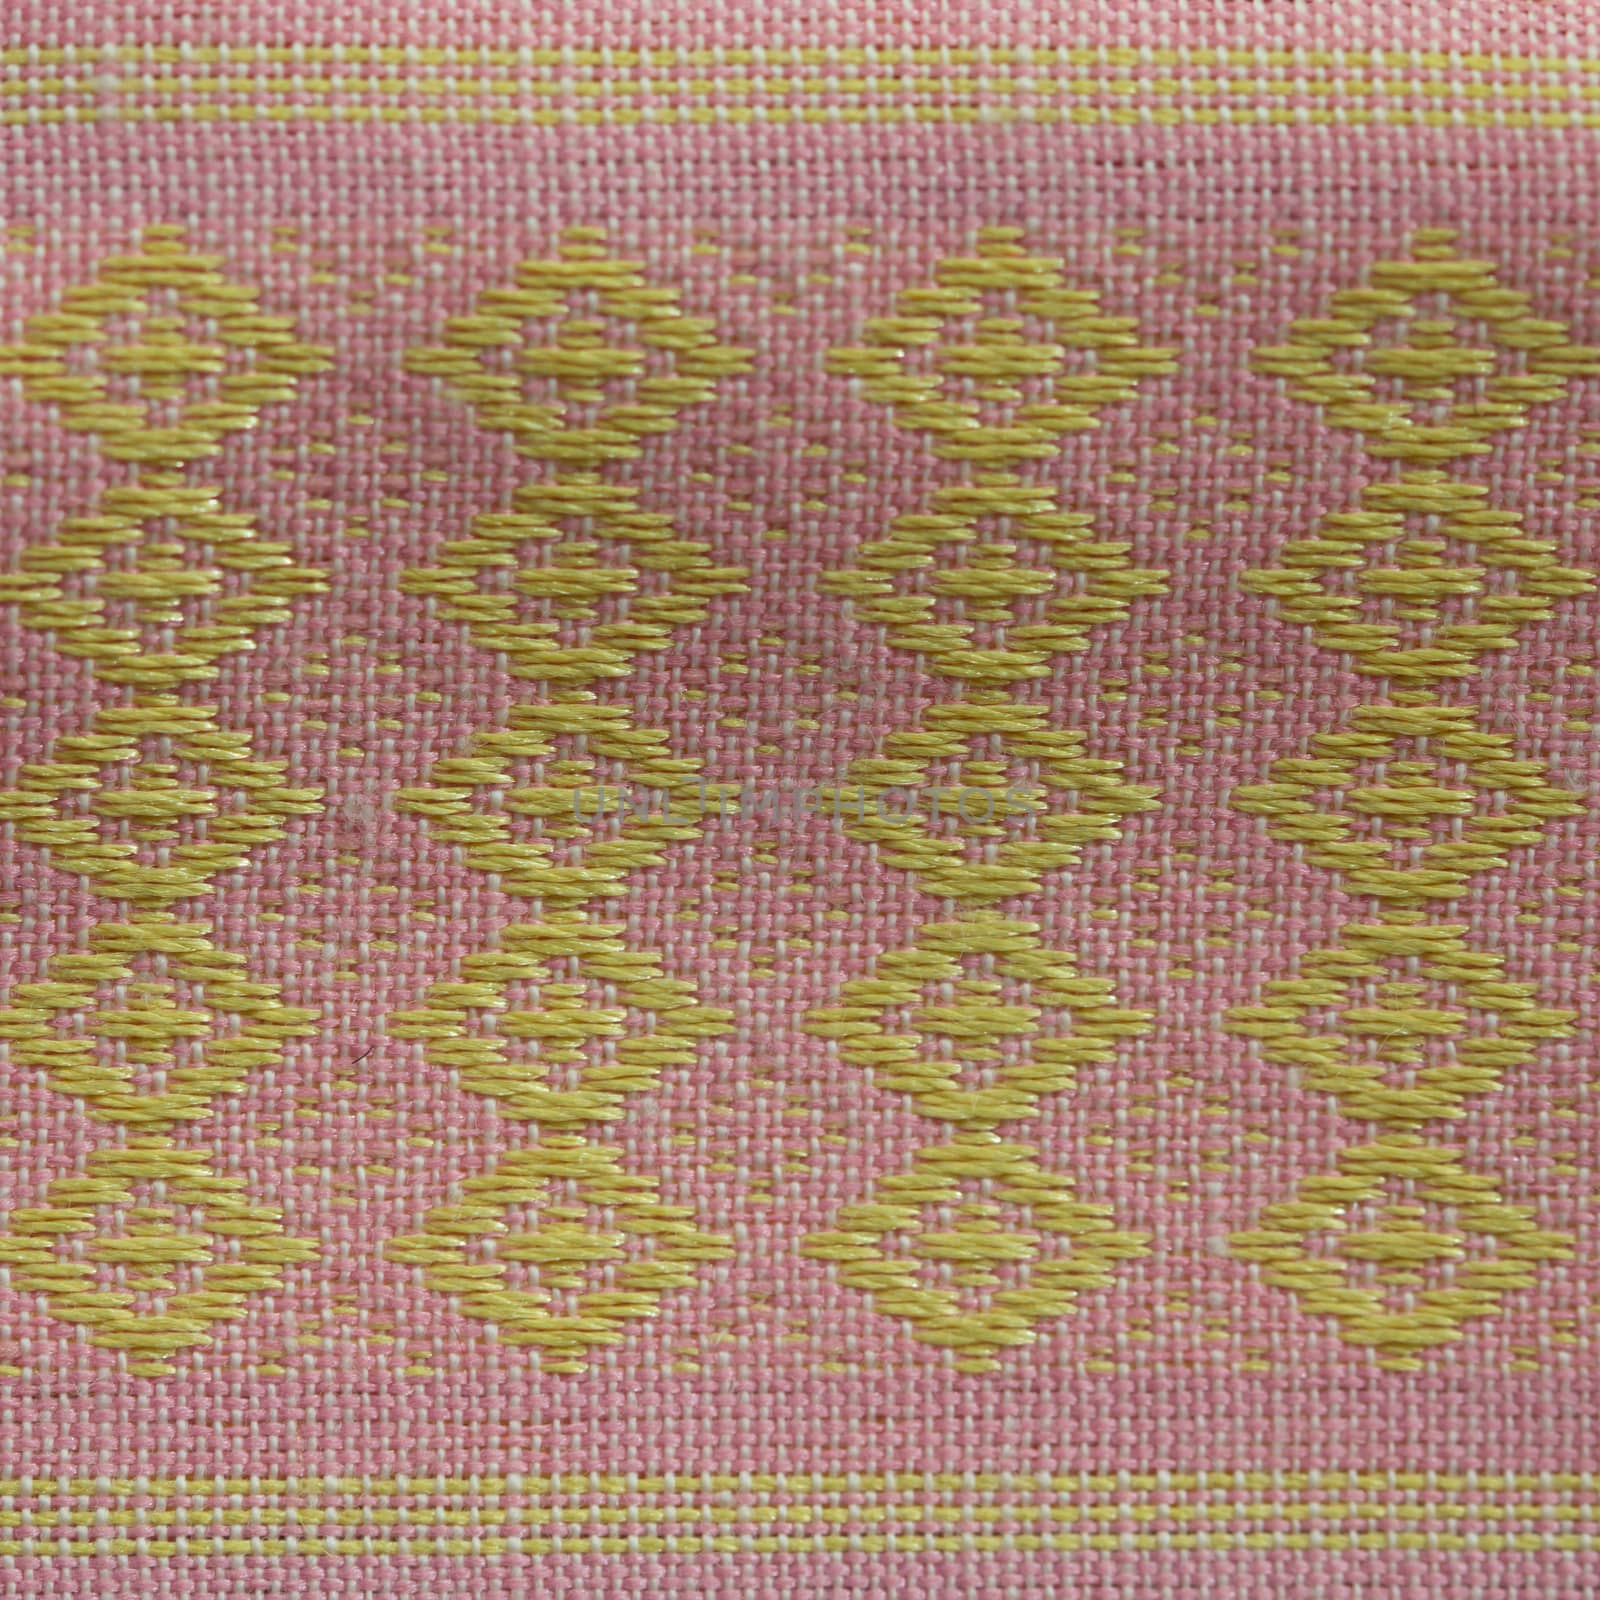 Fabric plaid texture.  by tiverylucky